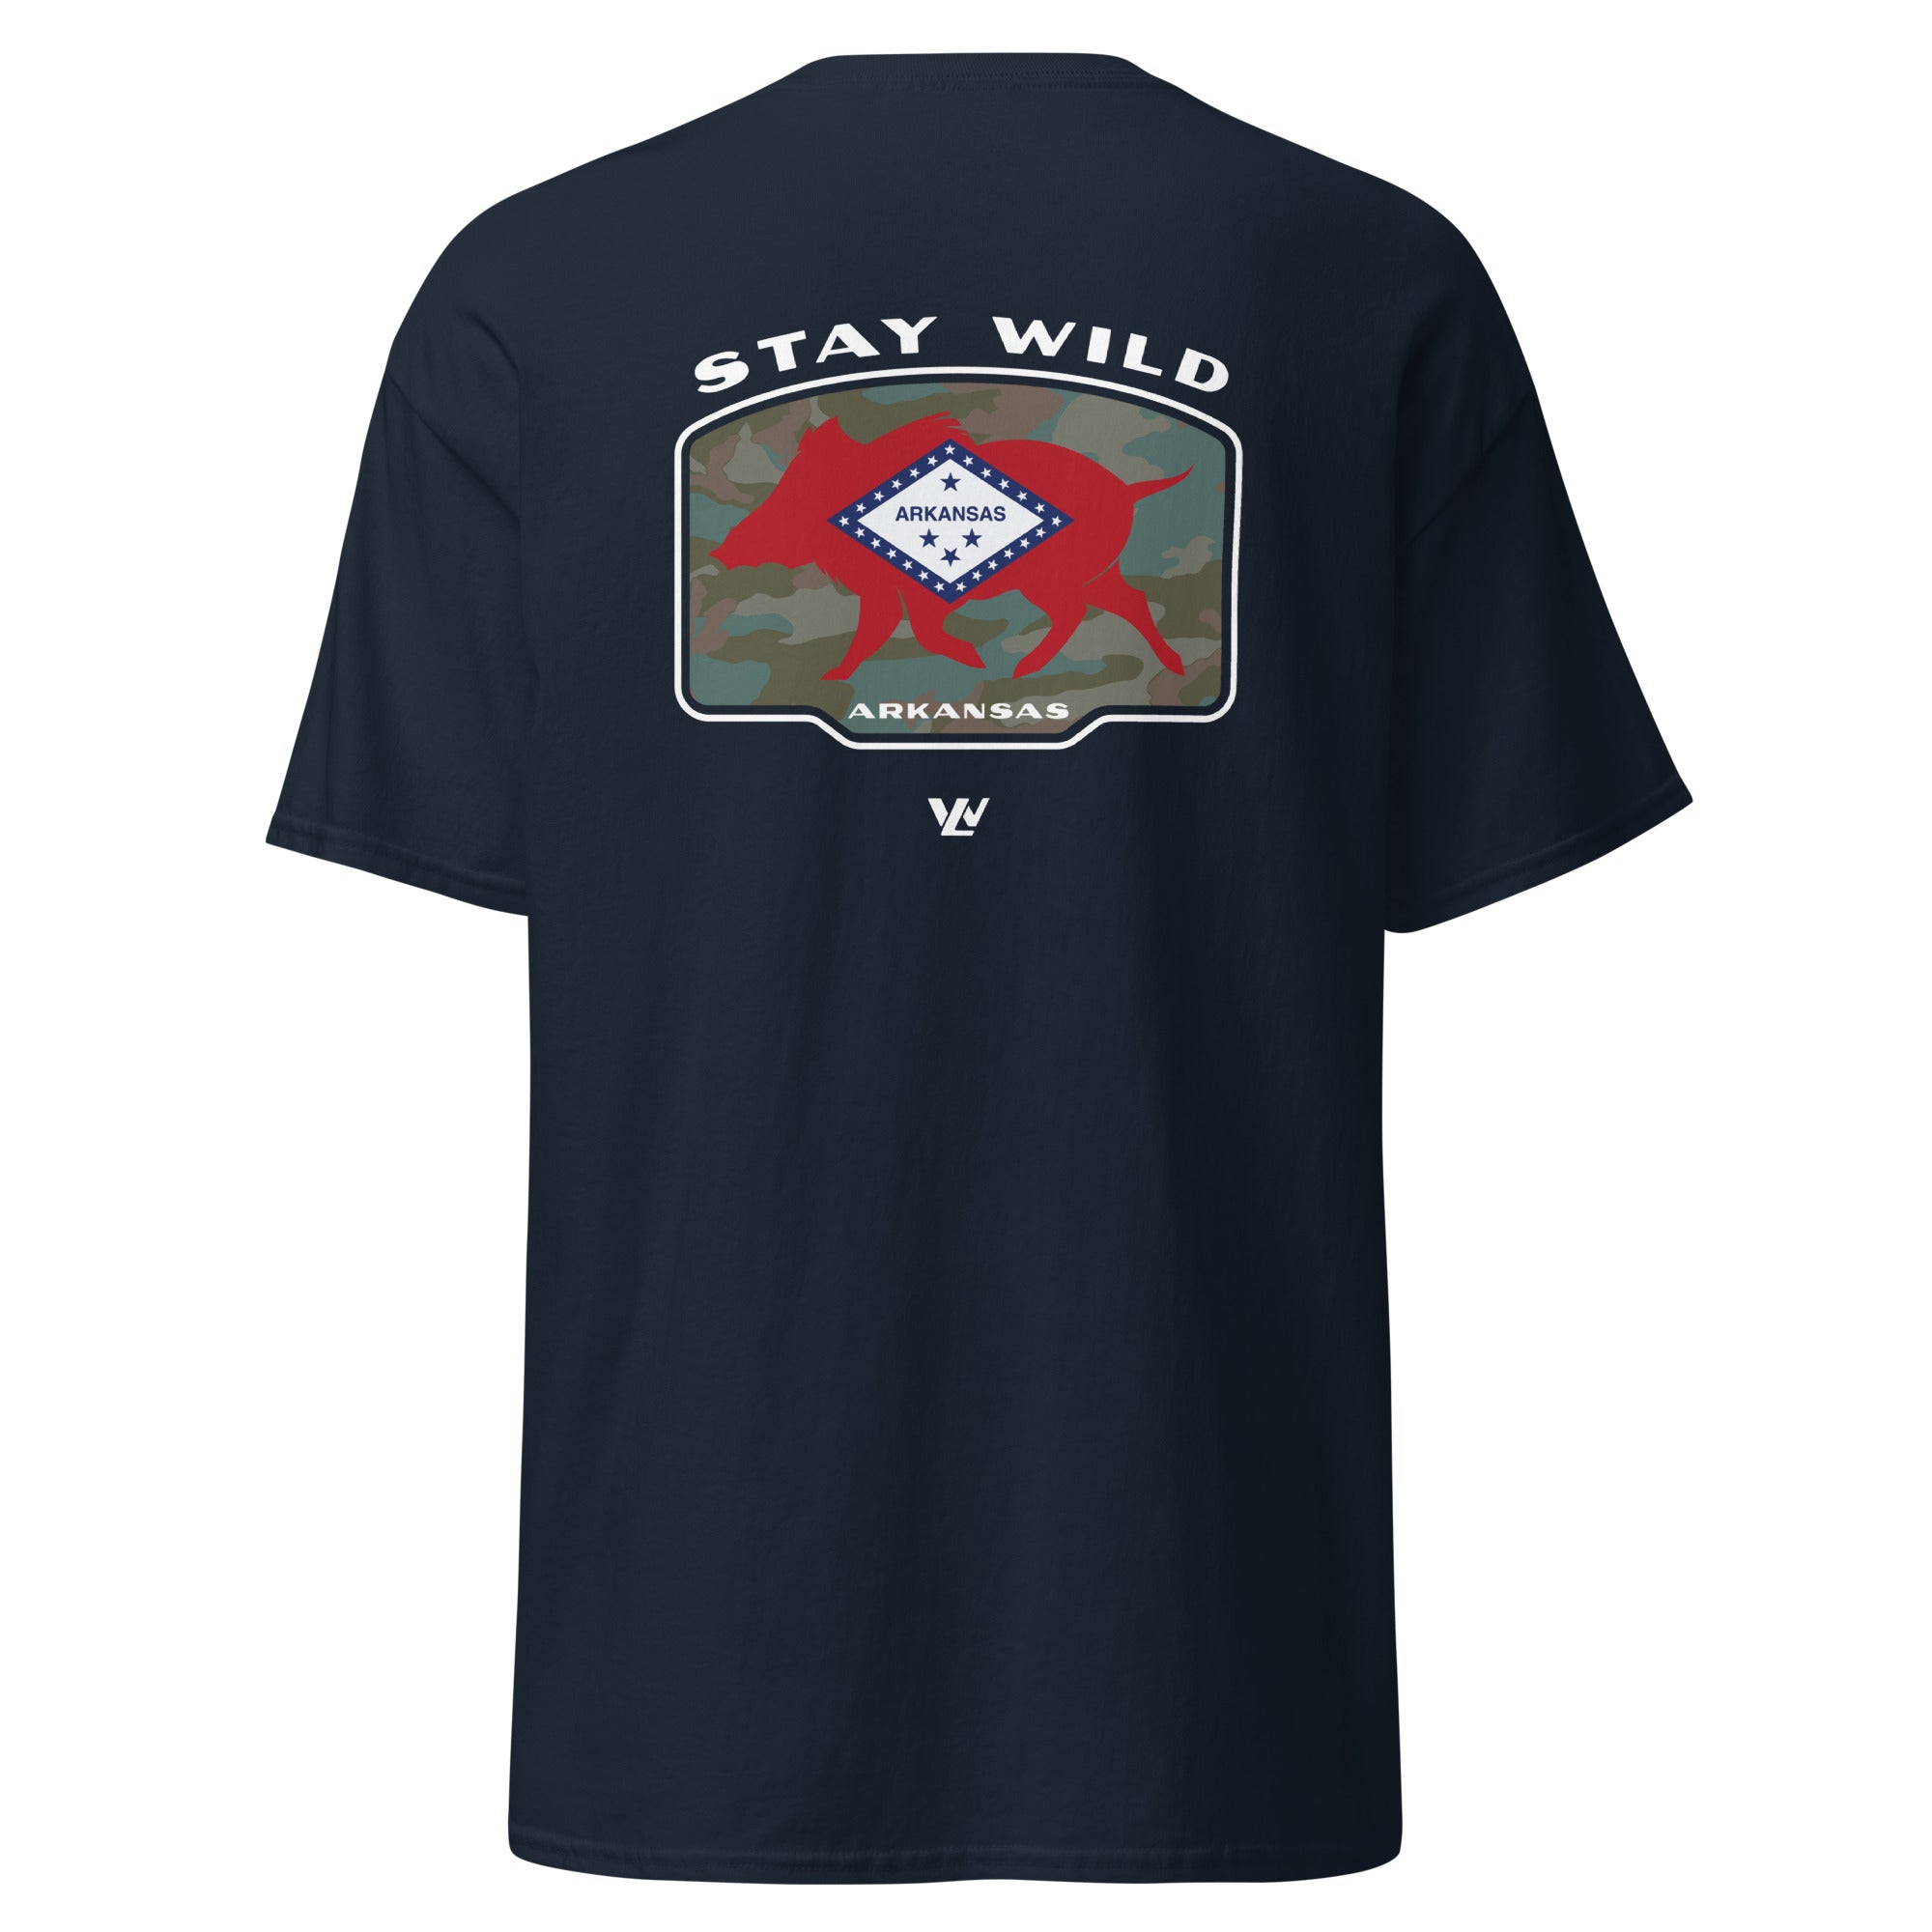 Stay Wild Arkansas T-Shirt - Wilding Life